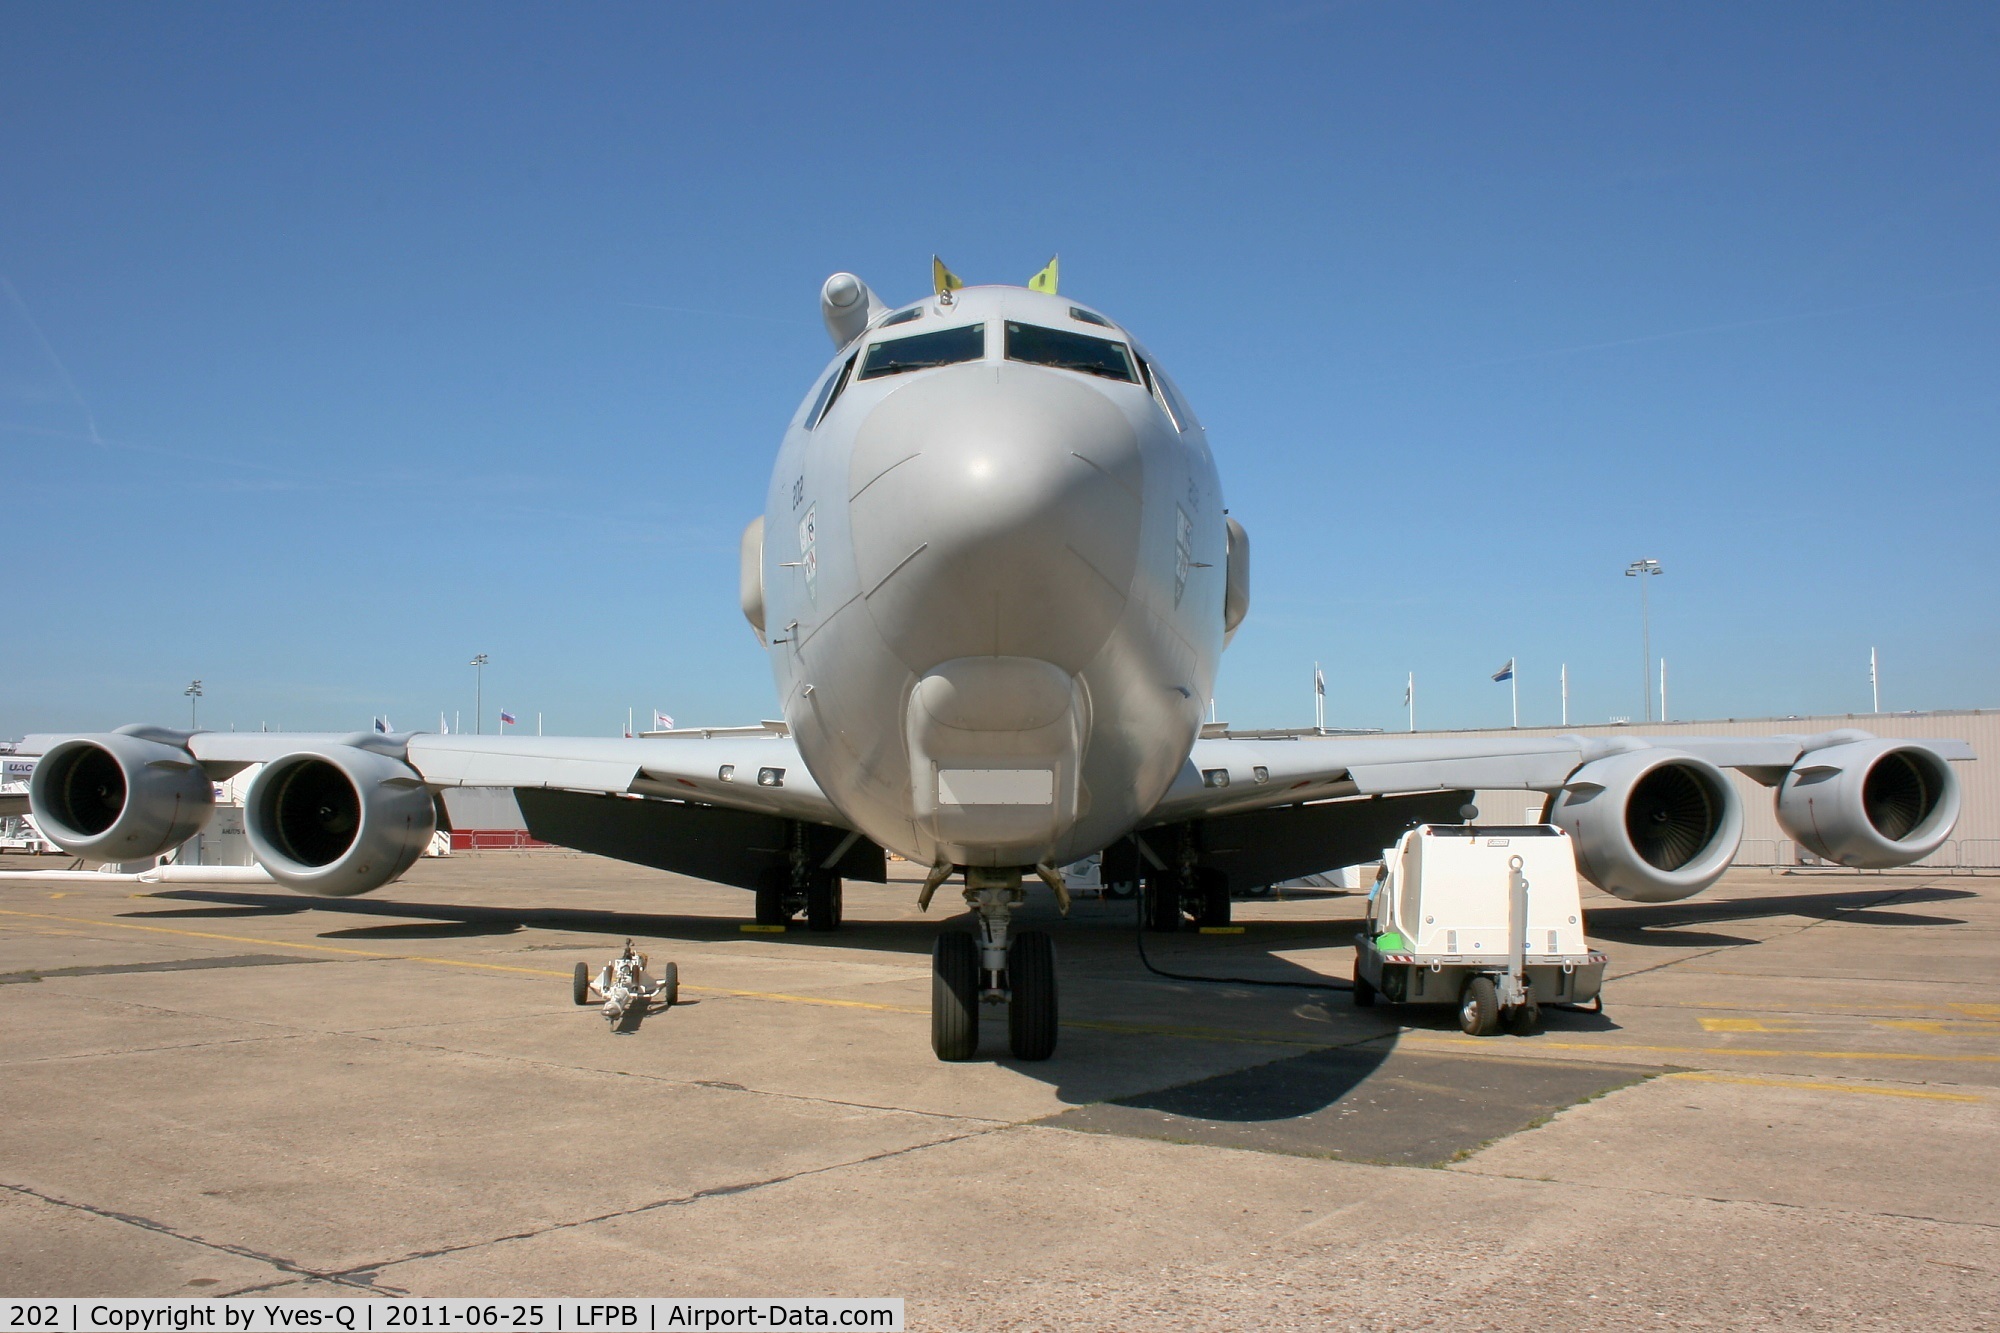 202, 1990 Boeing E-3F (707-300) Sentry C/N 24116, Boing E-3F SDCA, static display, Paris-Le Bourget (LFPB-LBG) Air show 2011